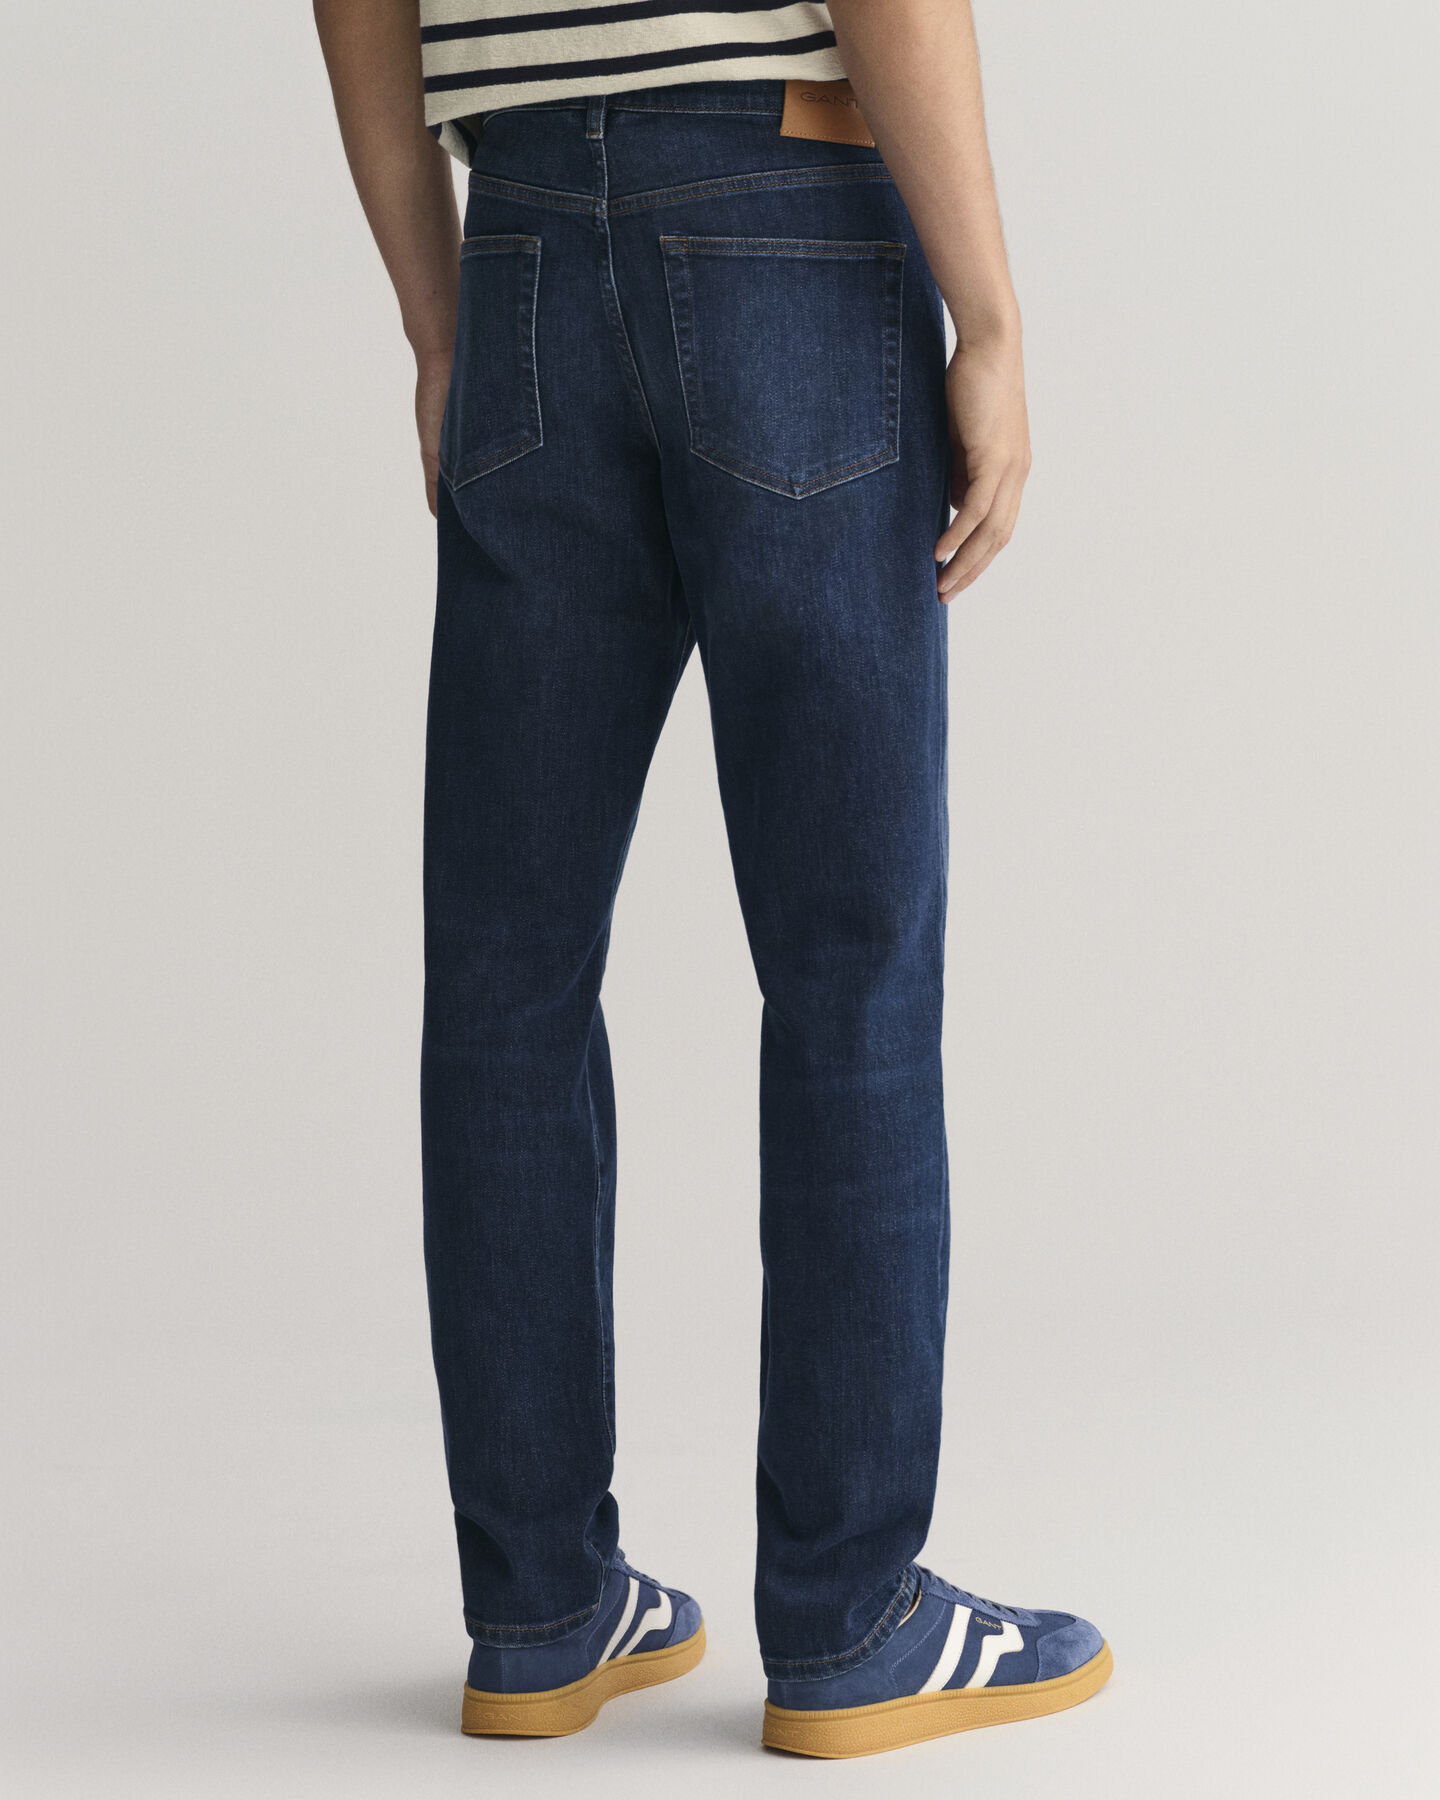 Jeans - GANT Fit Slim